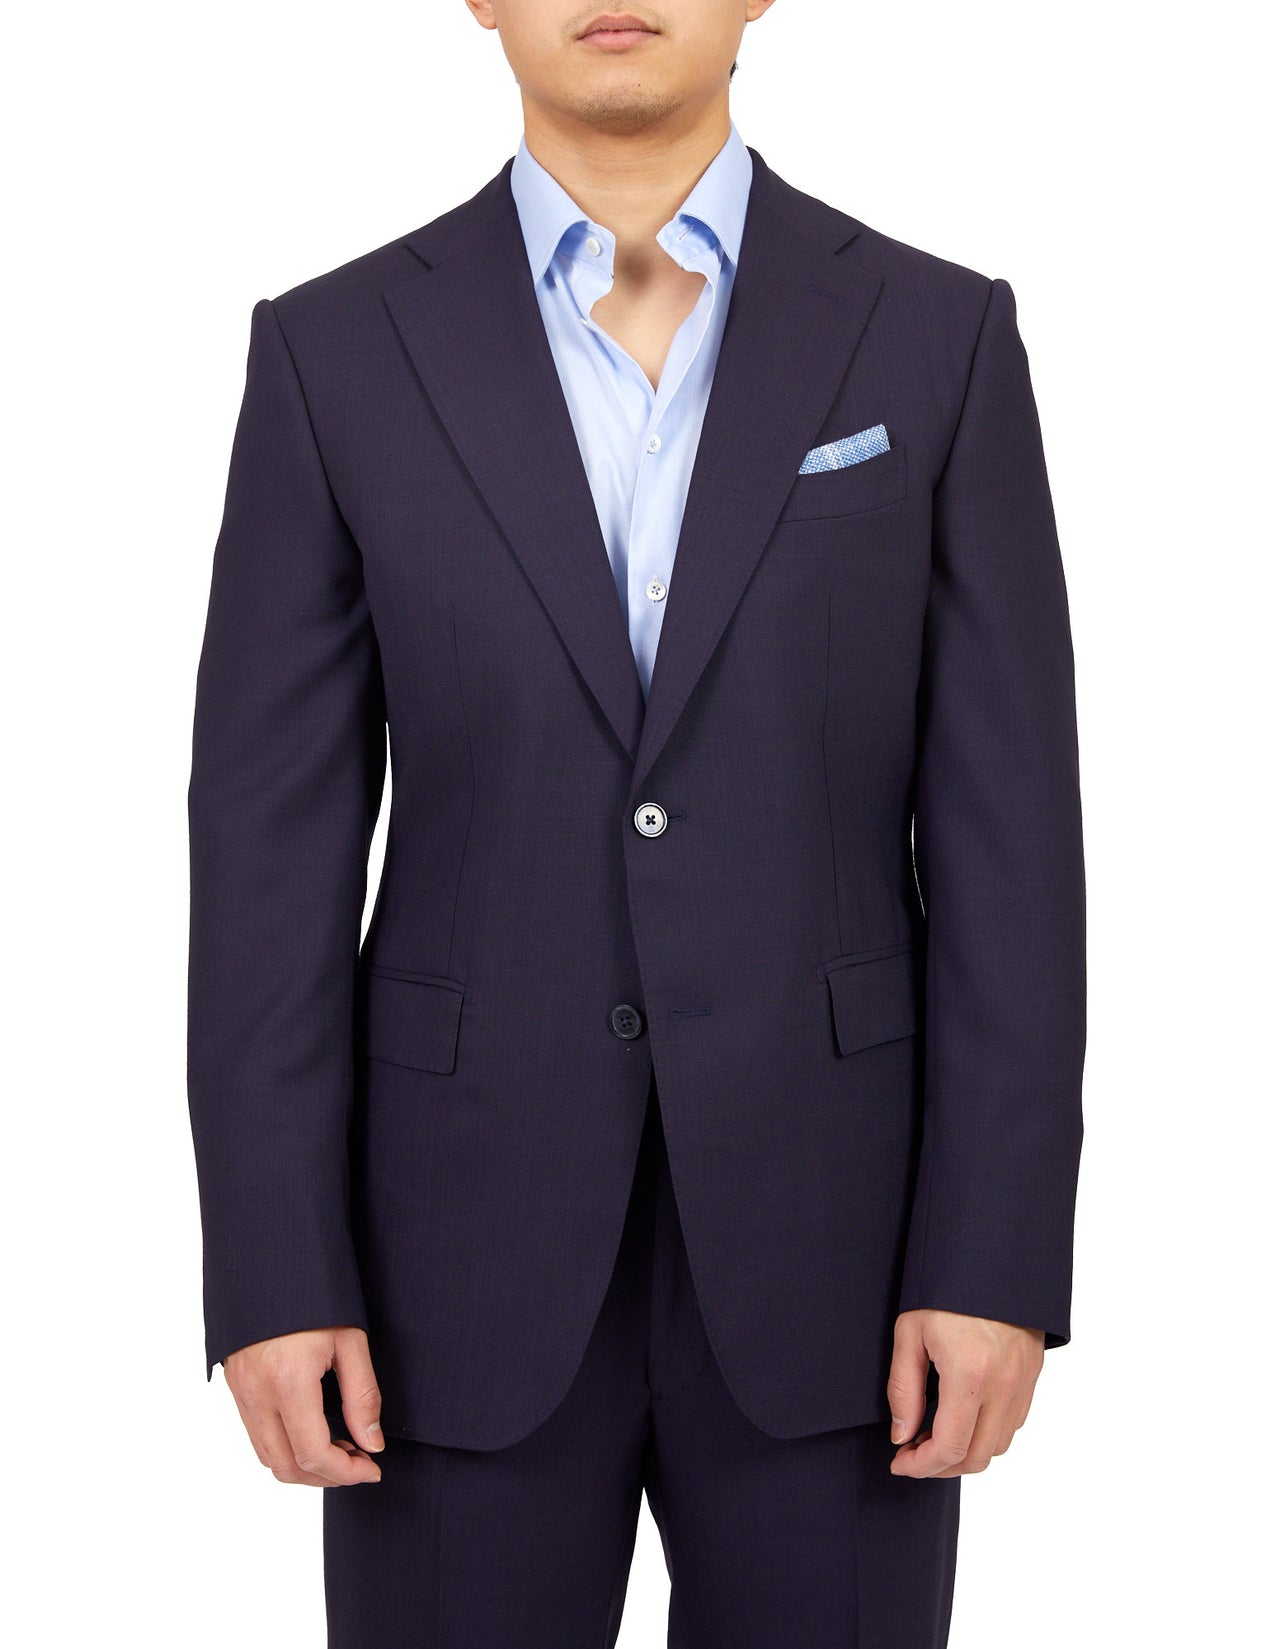 HENRY SARTORIAL X DORMEUIL Plain Suit NAVY LG